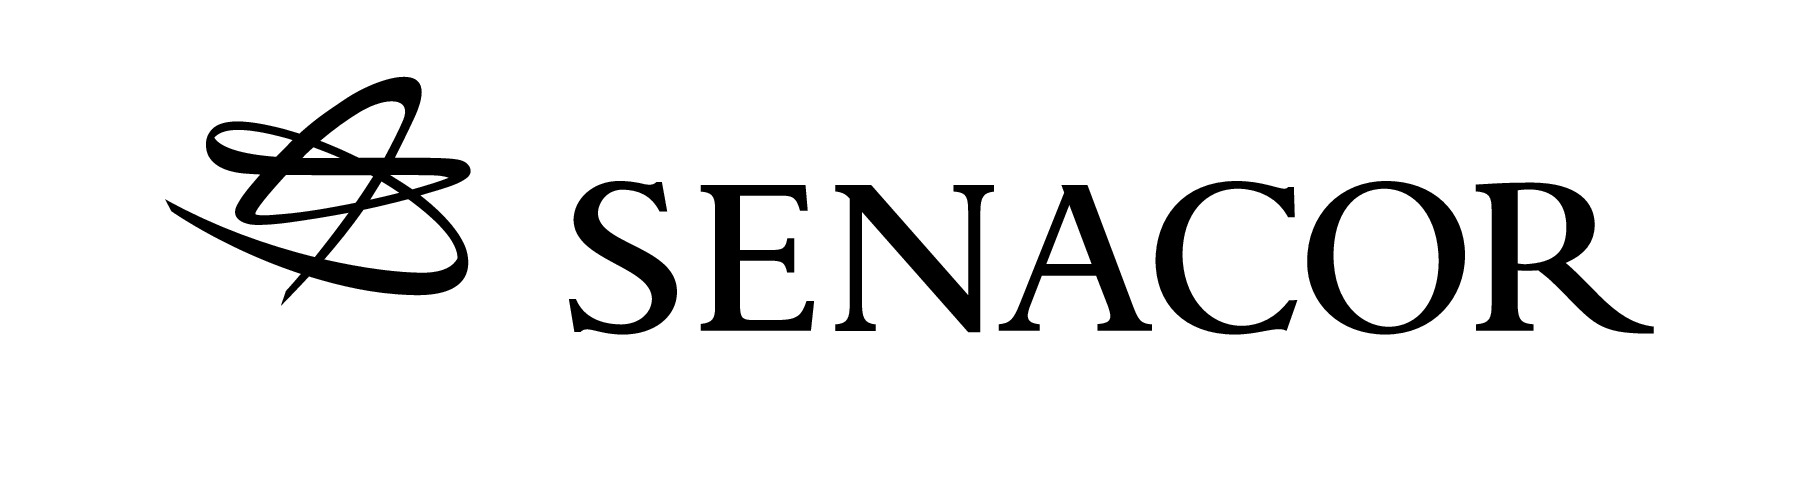 senacor logo